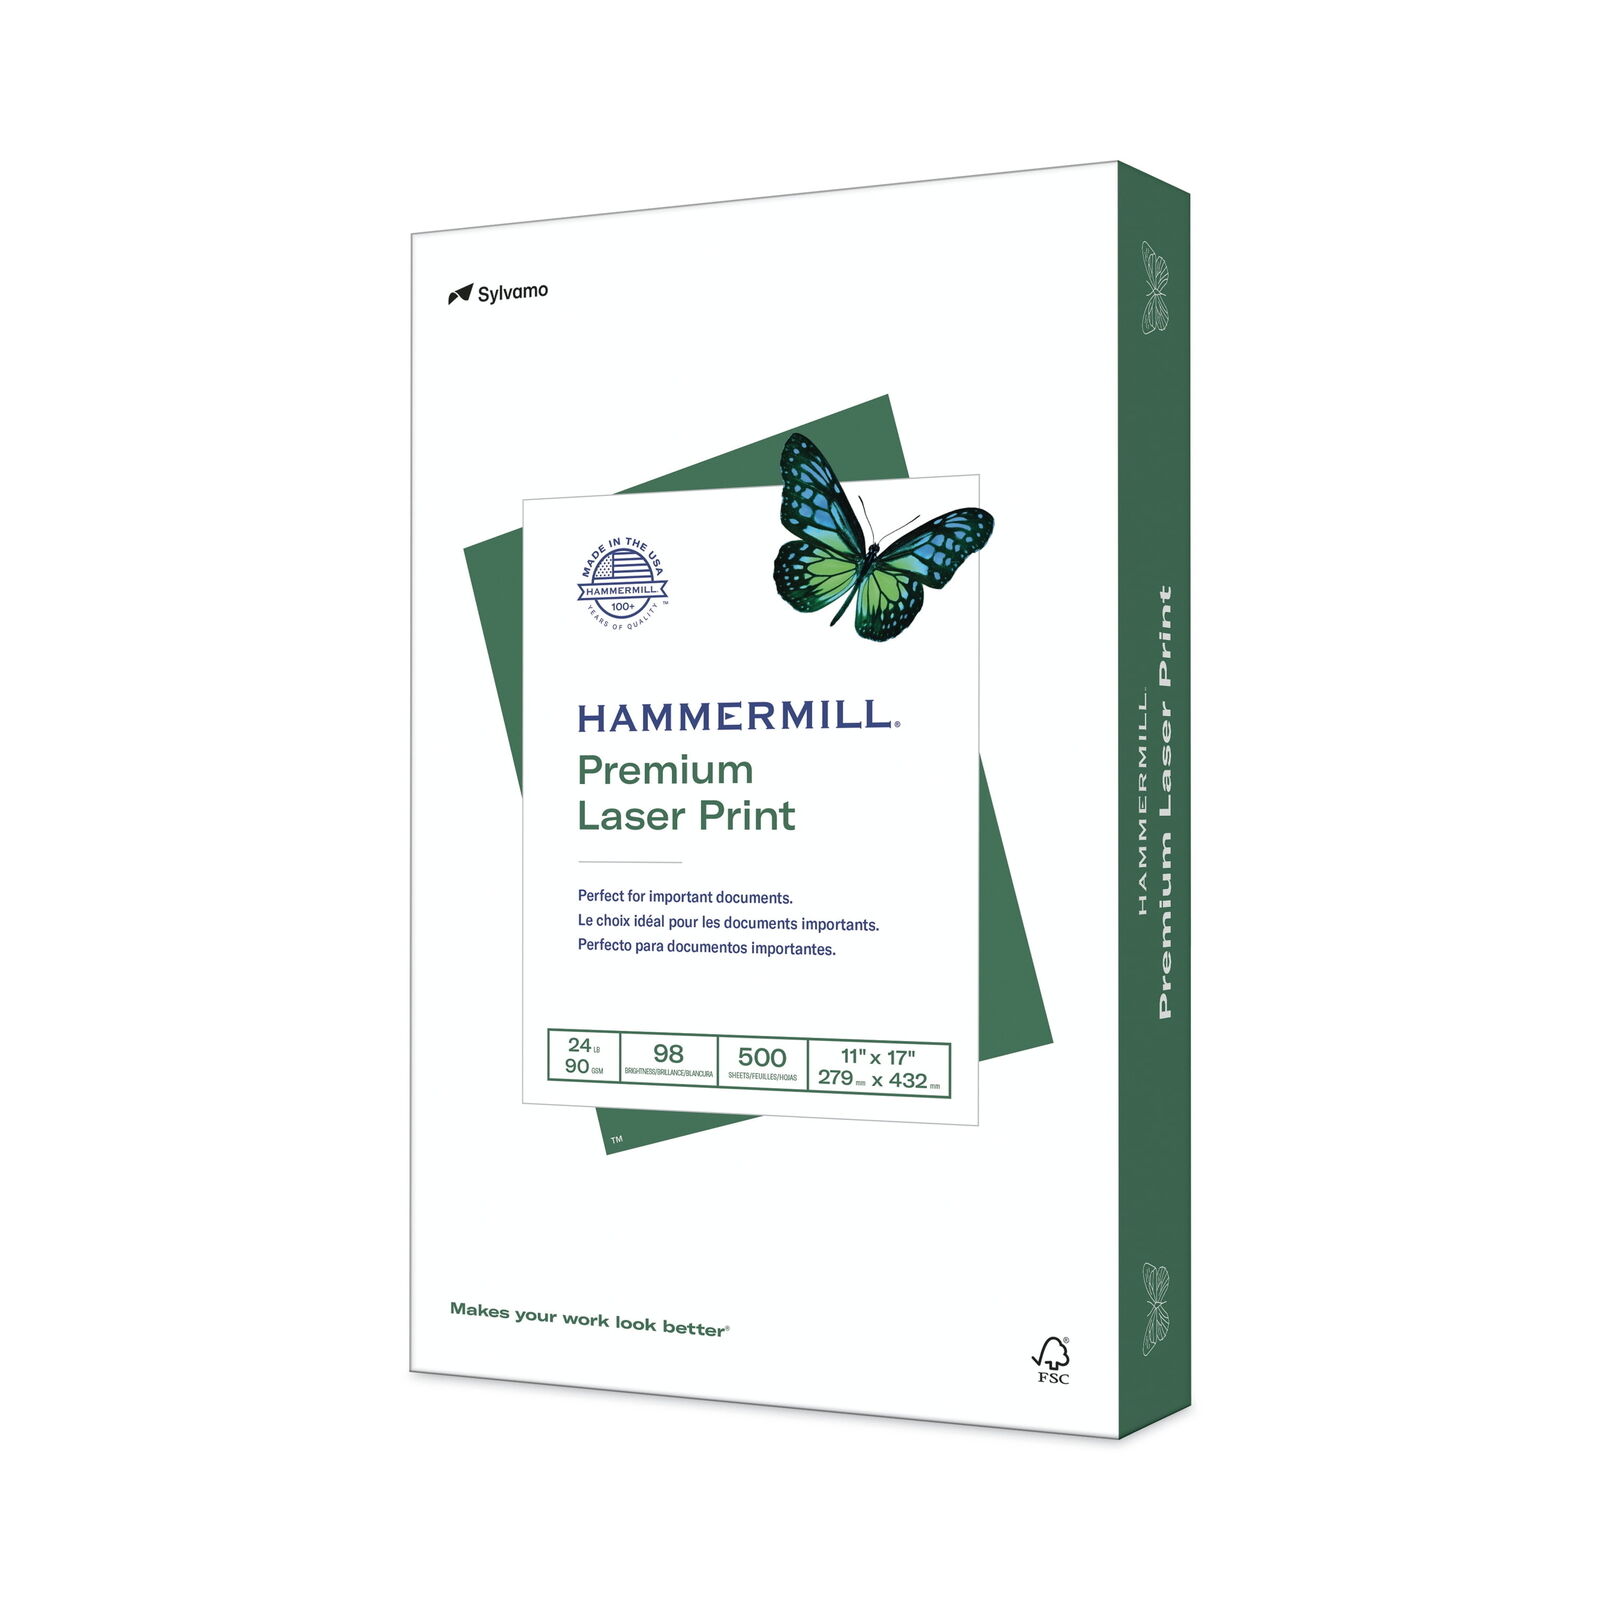 Hammermill Printer Paper, 24lb Premium Laser Print, 11x17, White, 1 Ream